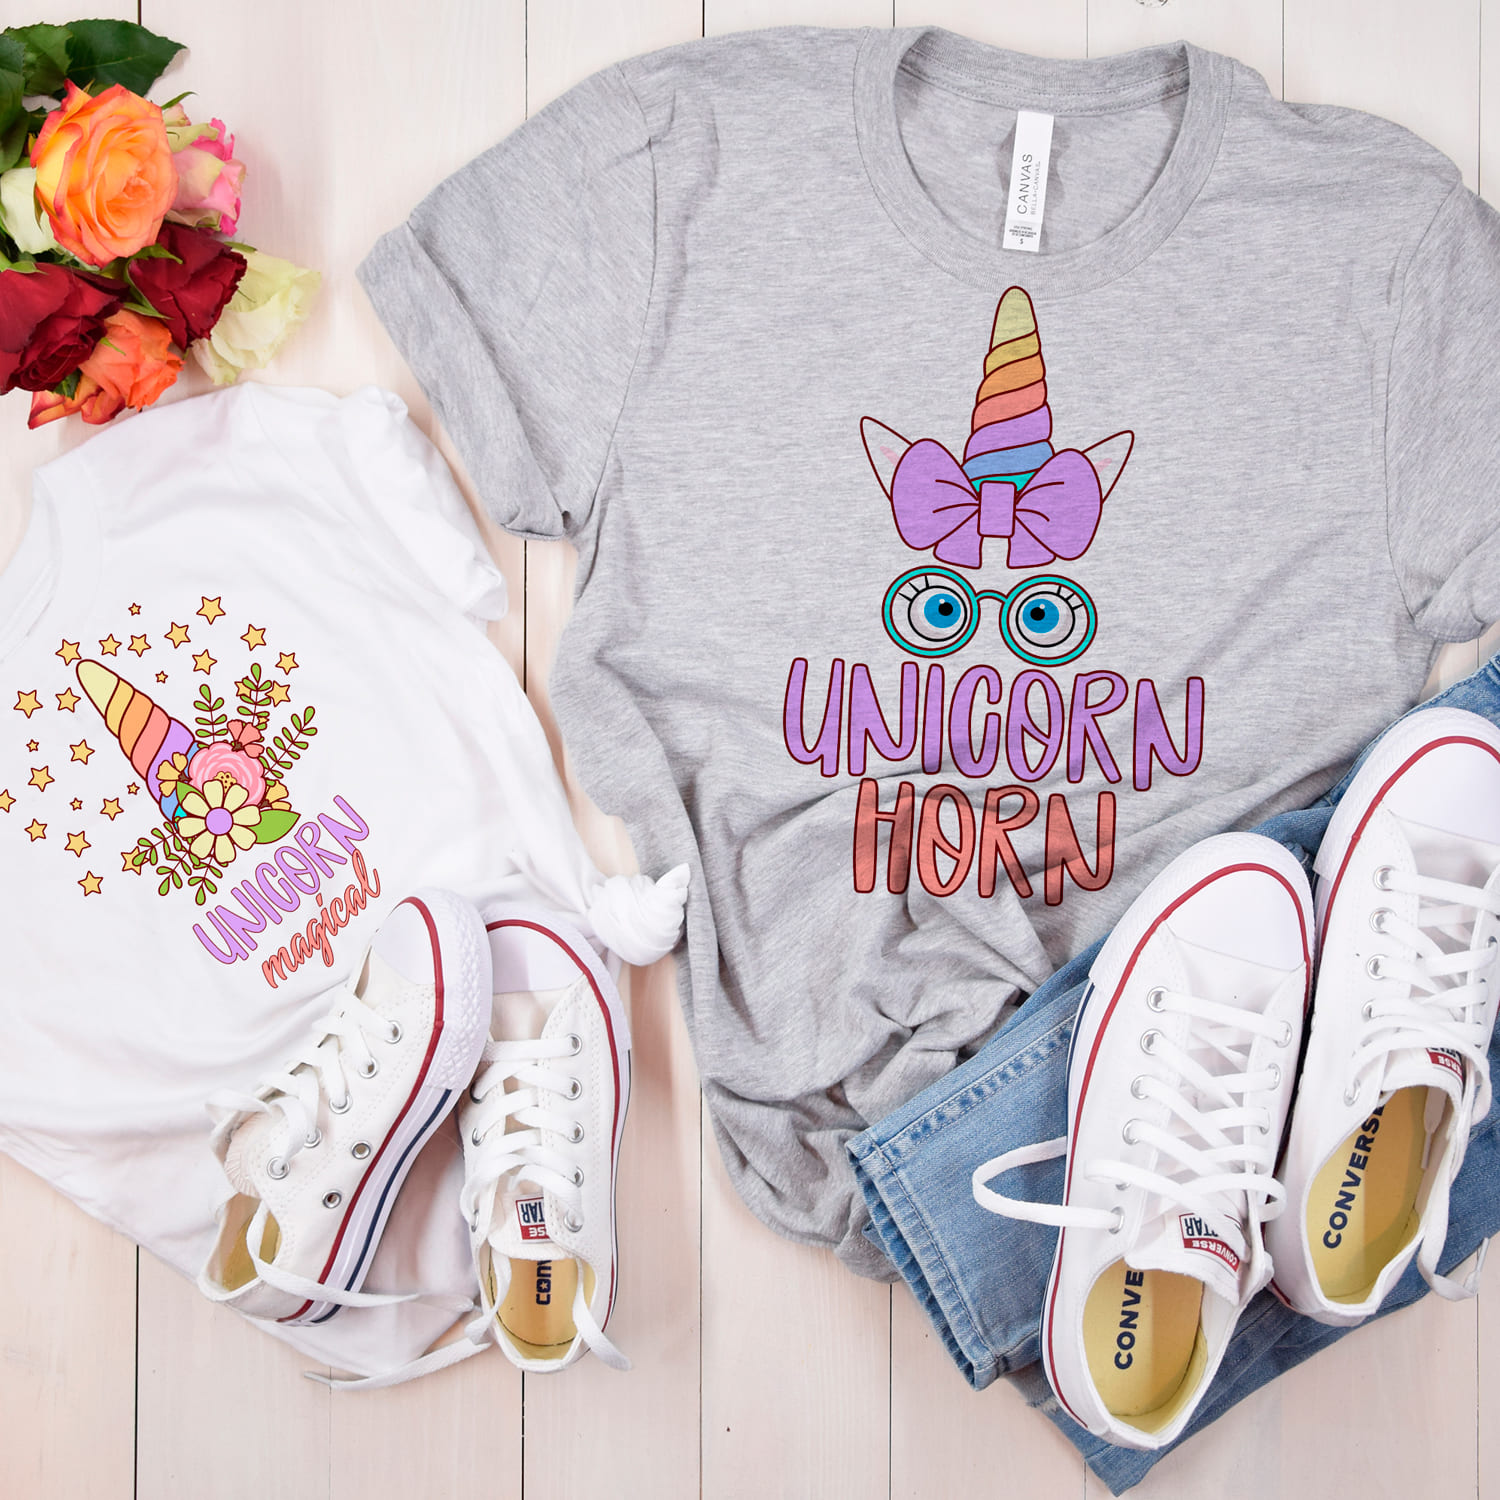 Unique t-shirts with cute unicorn.